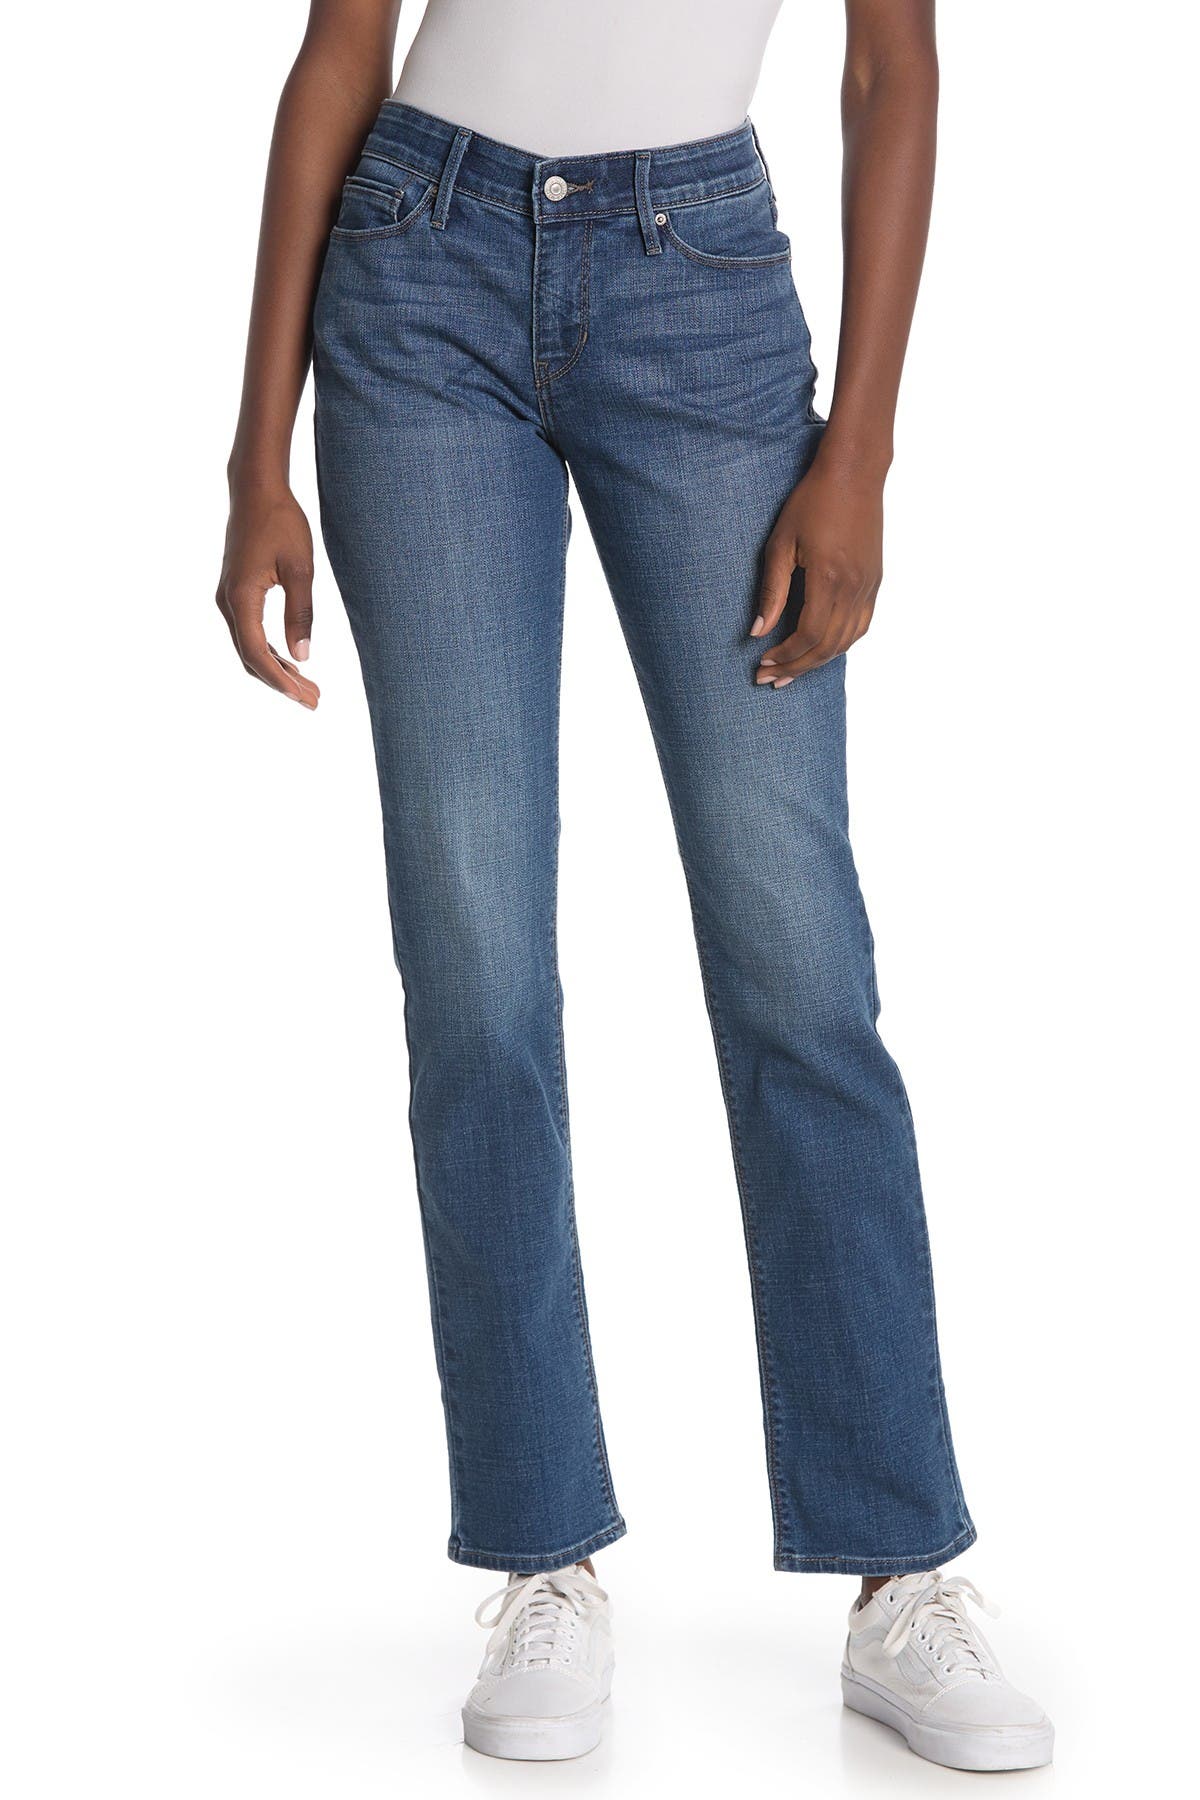 levi's women's 525 straight leg perfect waist jean